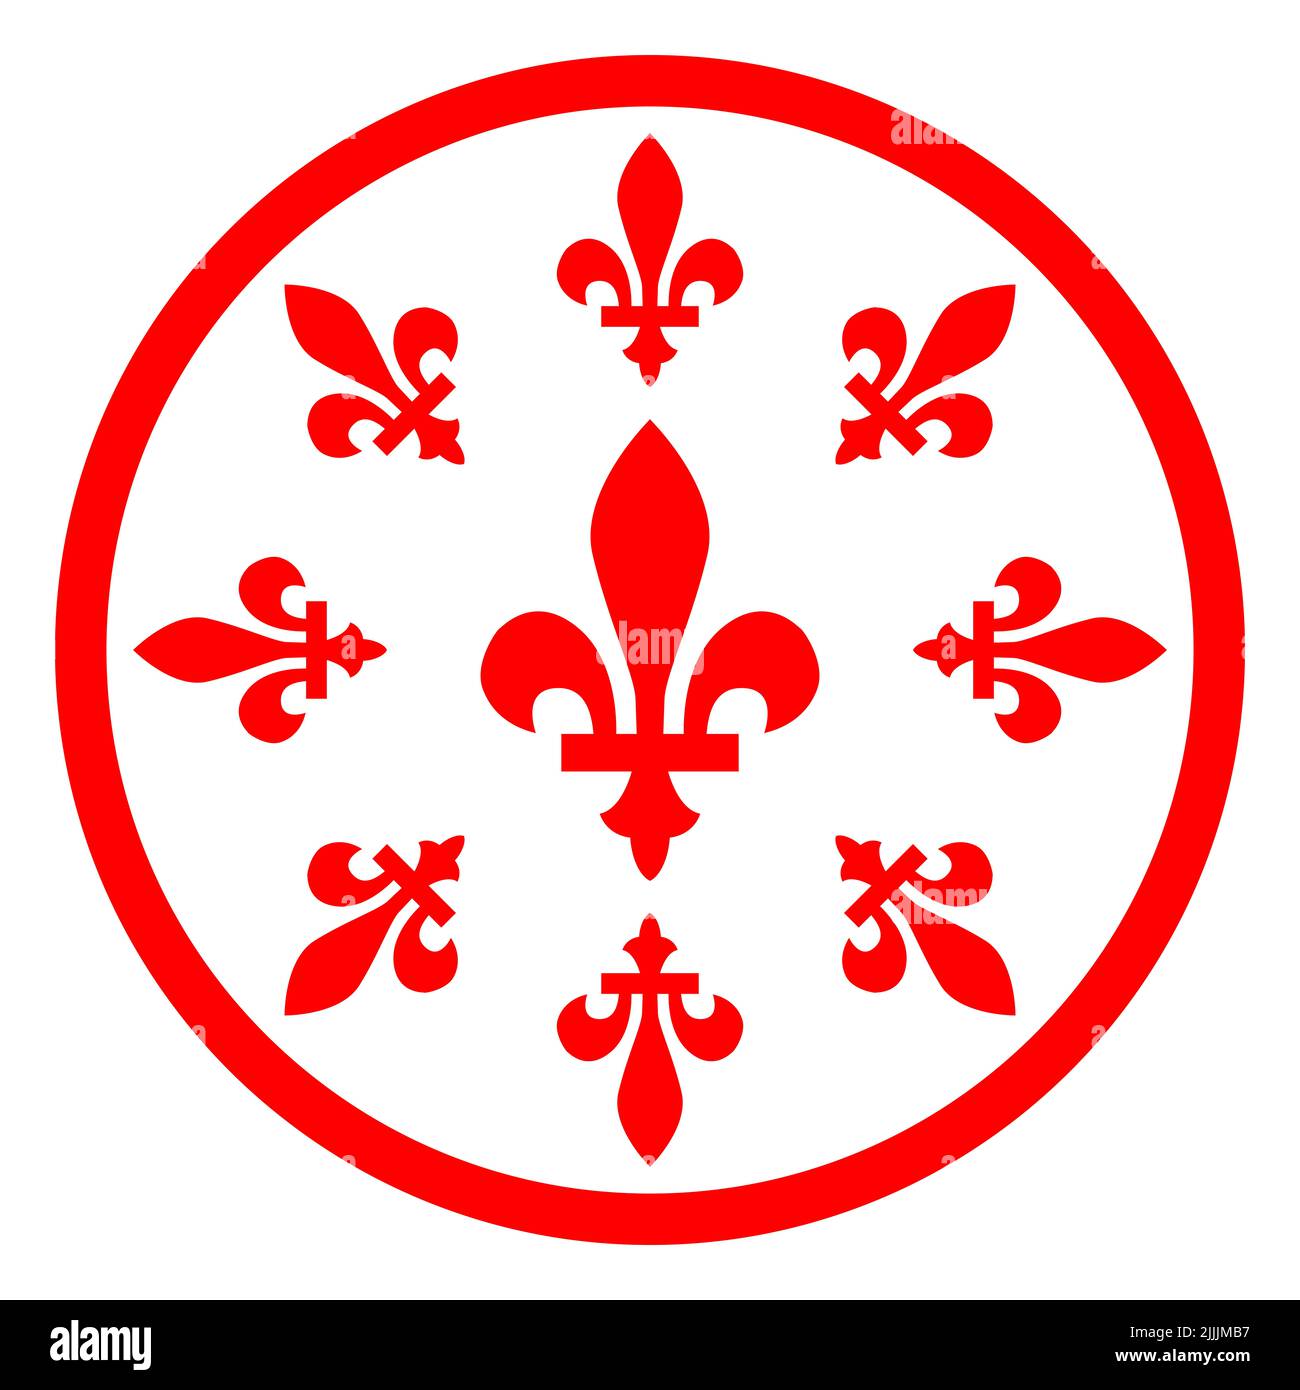 The fleur-de-lys motif as found on the flag of Quebec Canada Stock Photo